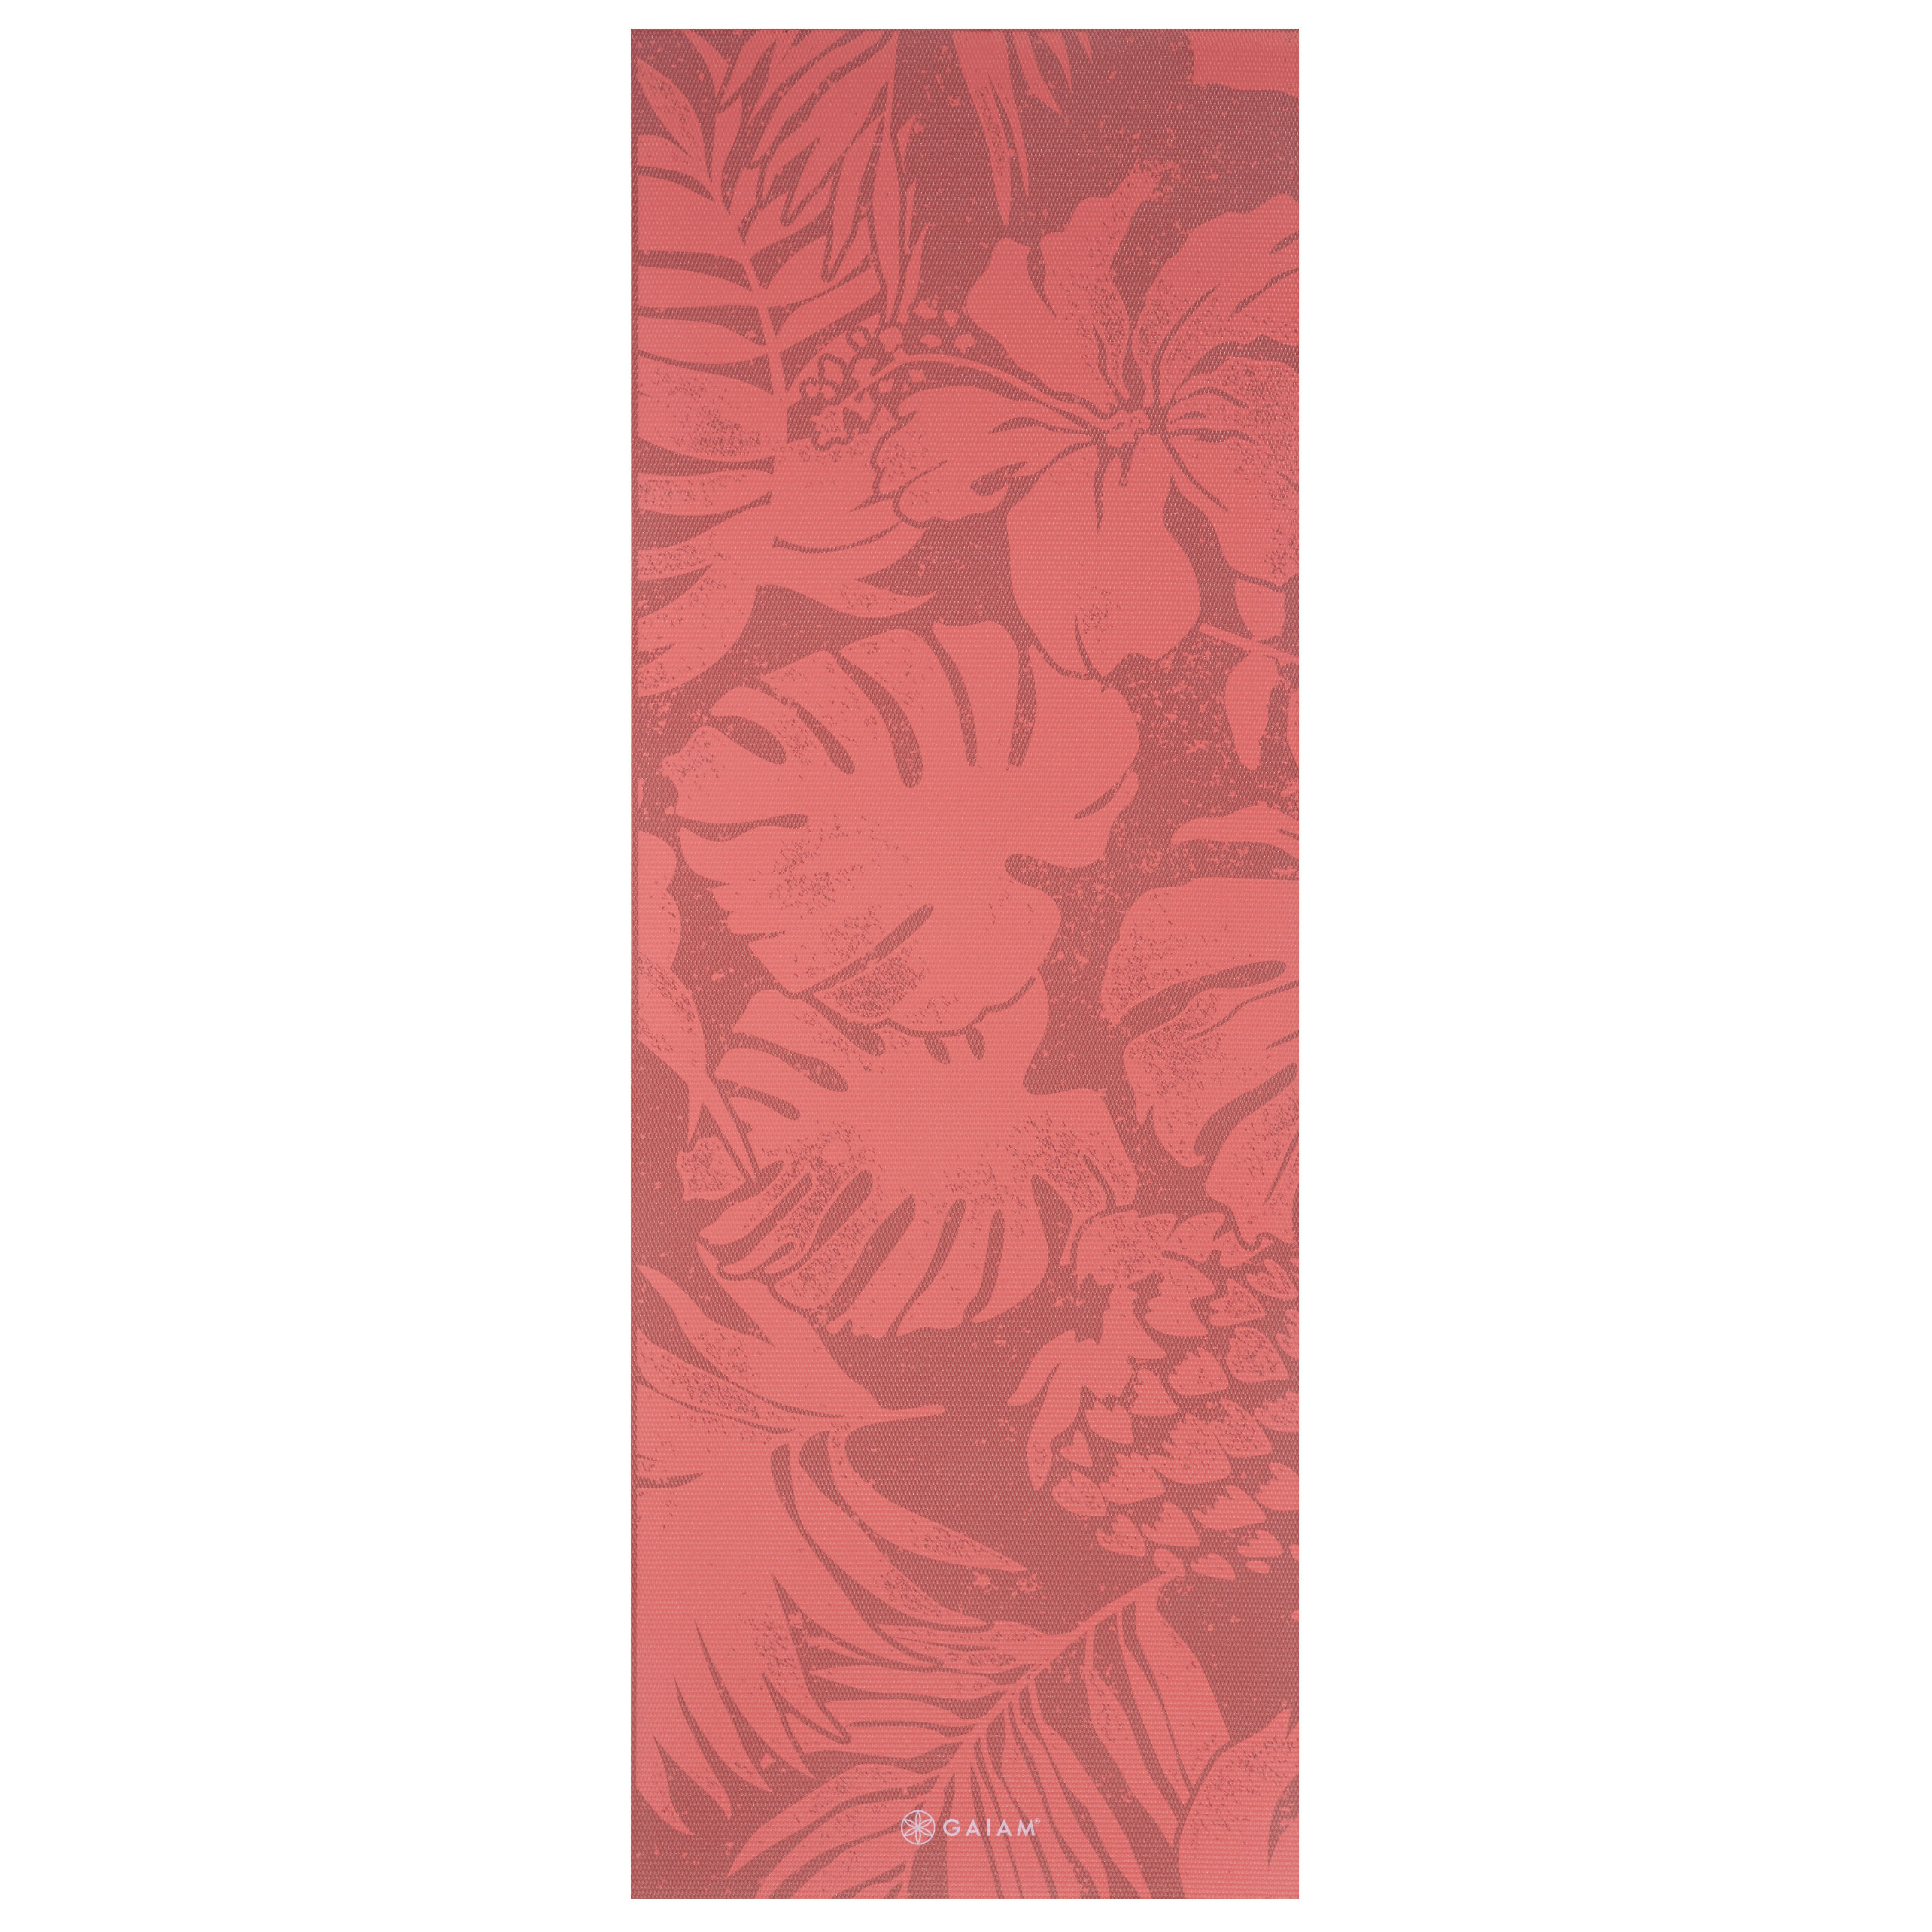 Gaiam Tropical Sunrise Printed Yoga Mat (4mm) flat